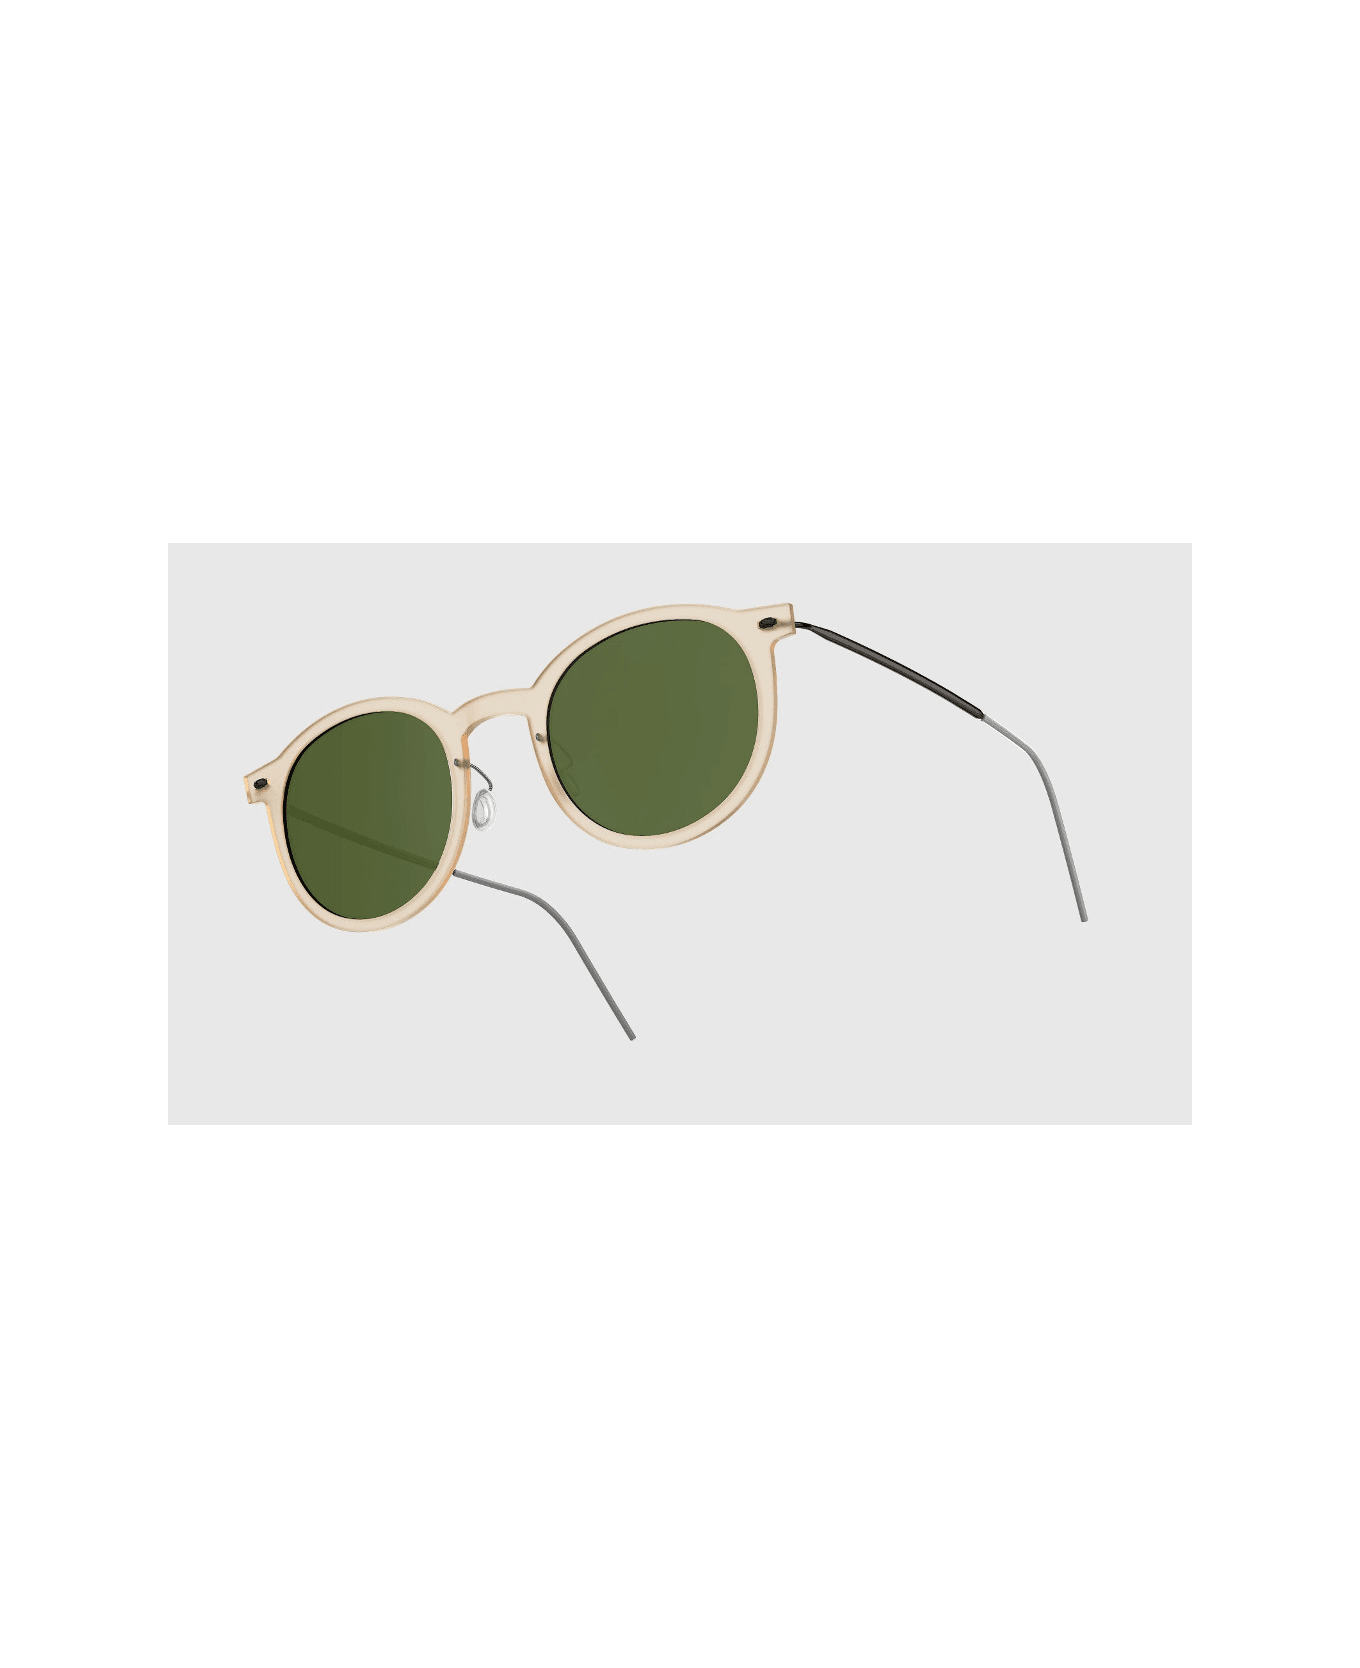 LINDBERG SR 8338 Sunglasses